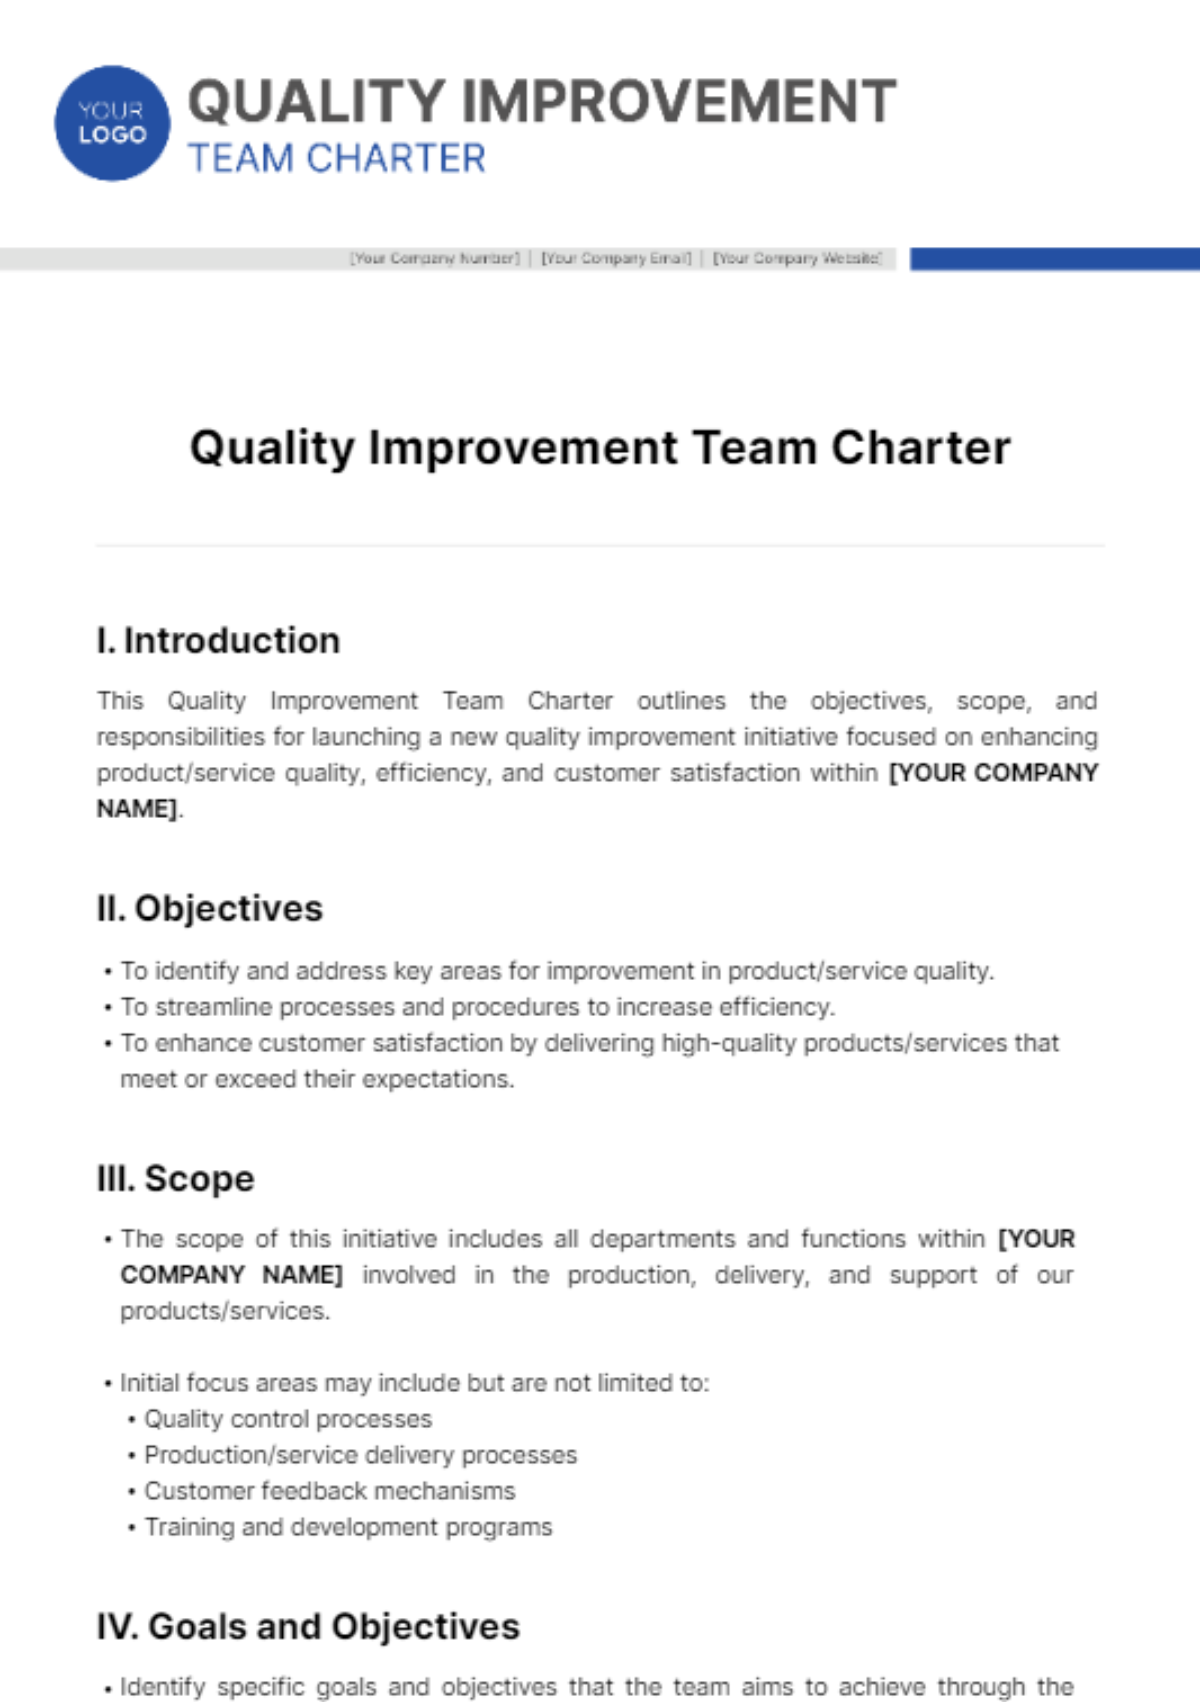 Quality Improvement Team Charter Template